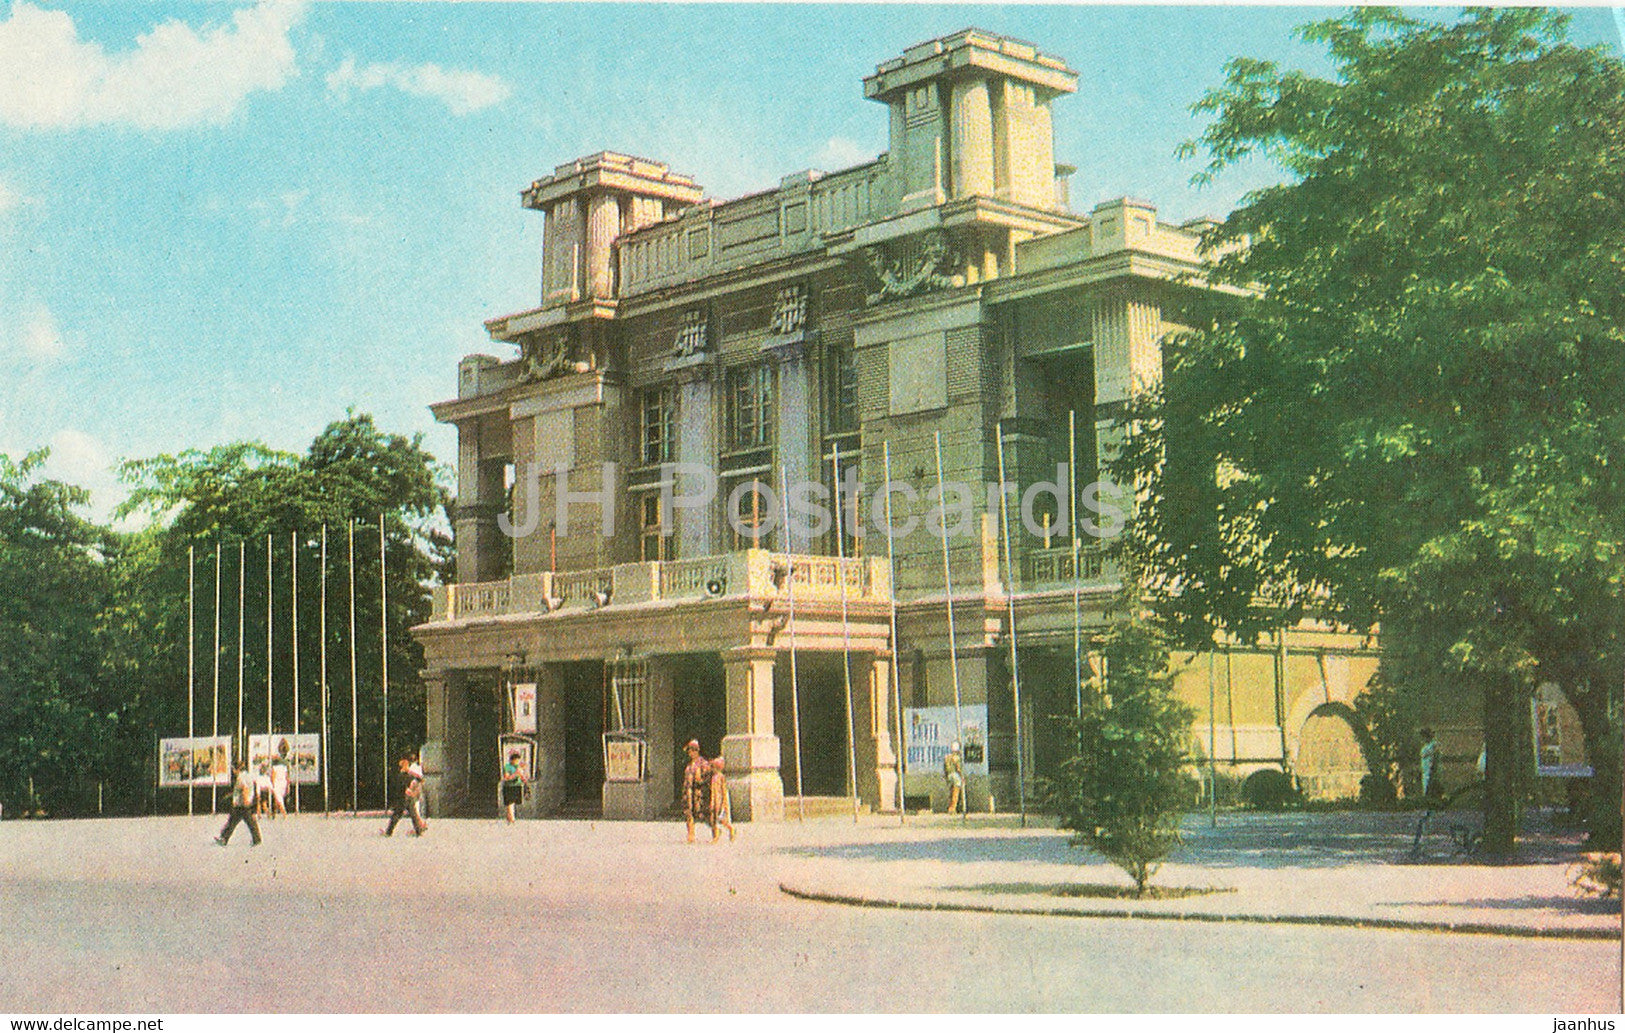 Yevpatoriya - Evpatoria - Pushkin Drama Theatre - Crimea - 1971 - Ukraine USSR - unused - JH Postcards